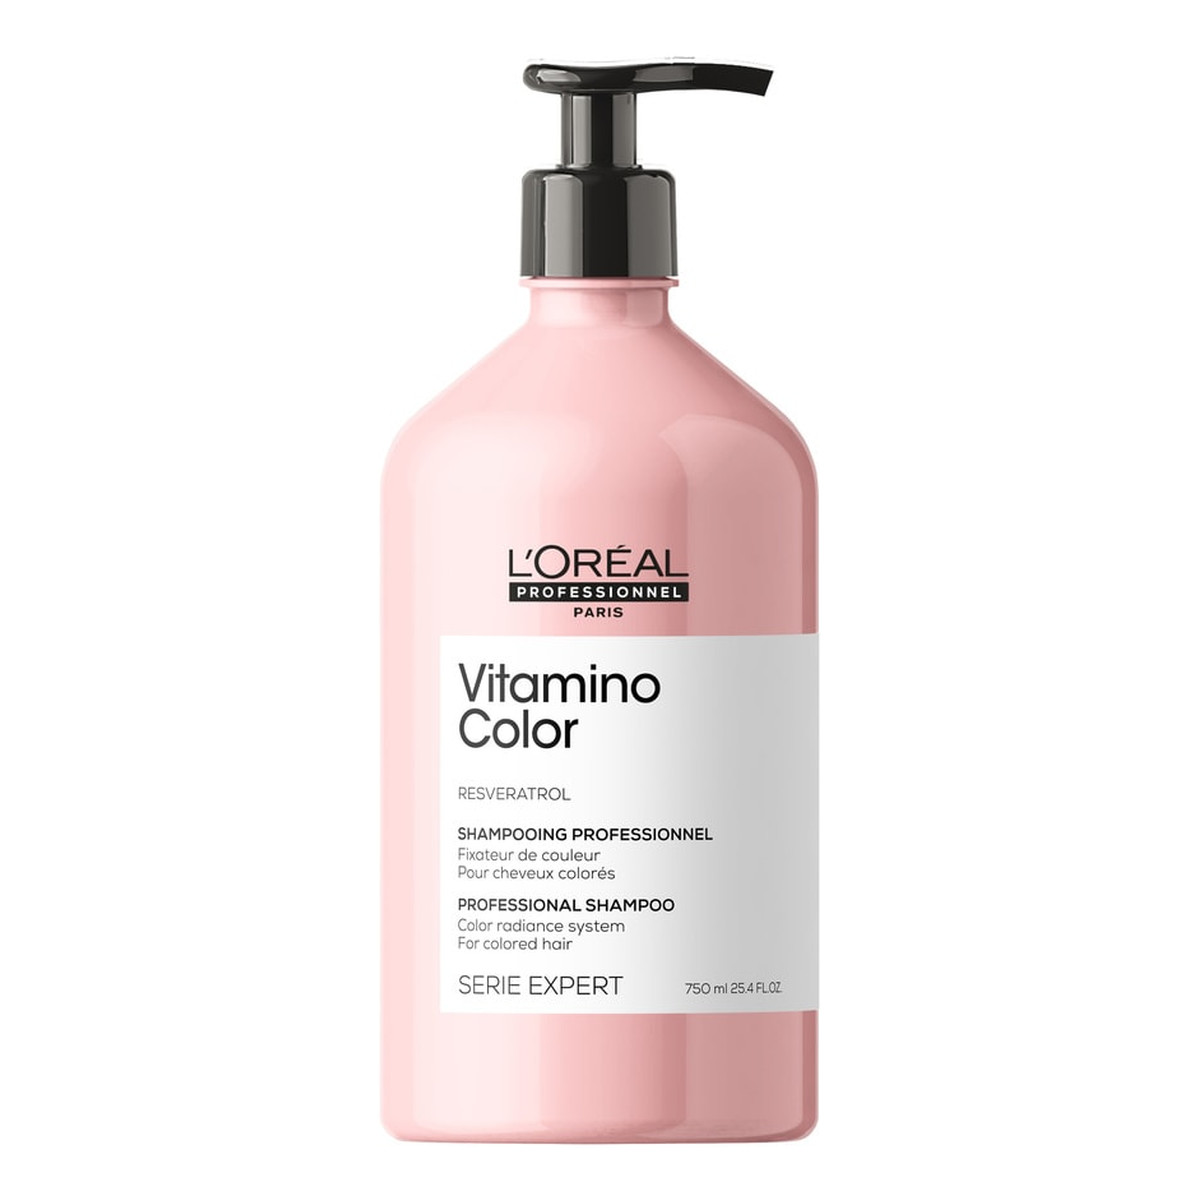 L'Oreal Paris Serie expert vitamino color shampoo szampon do włosów koloryzowanych 750ml